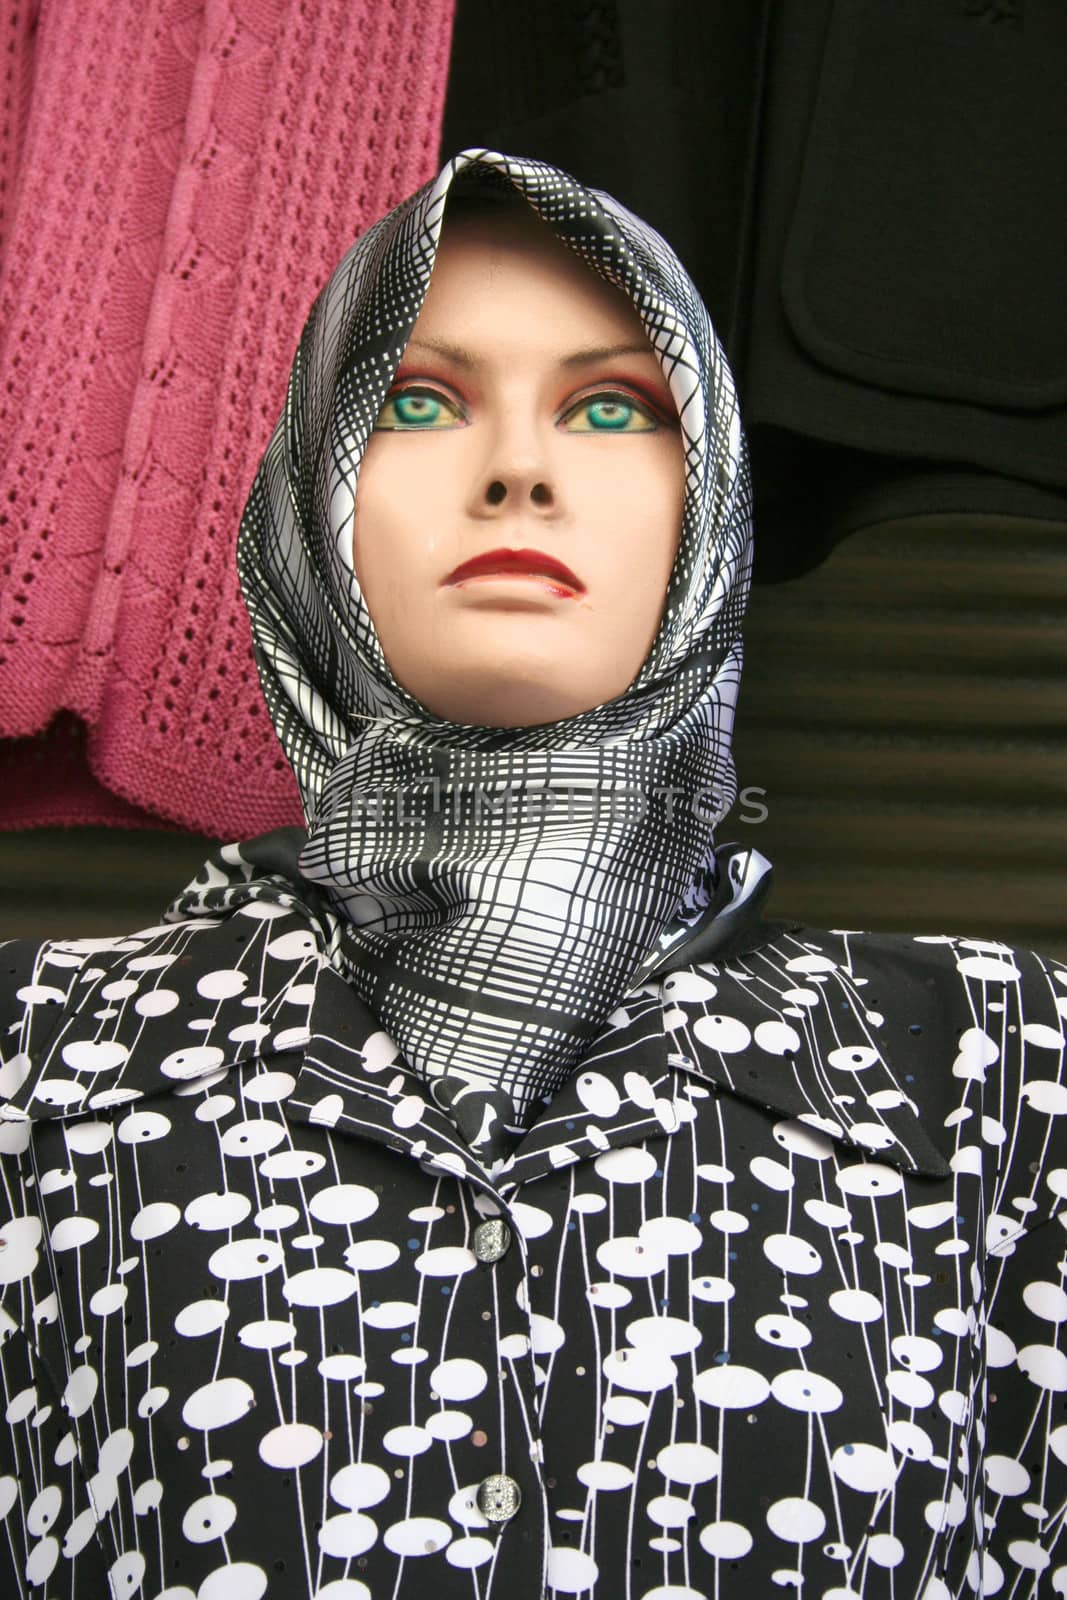 mannequin in scarf